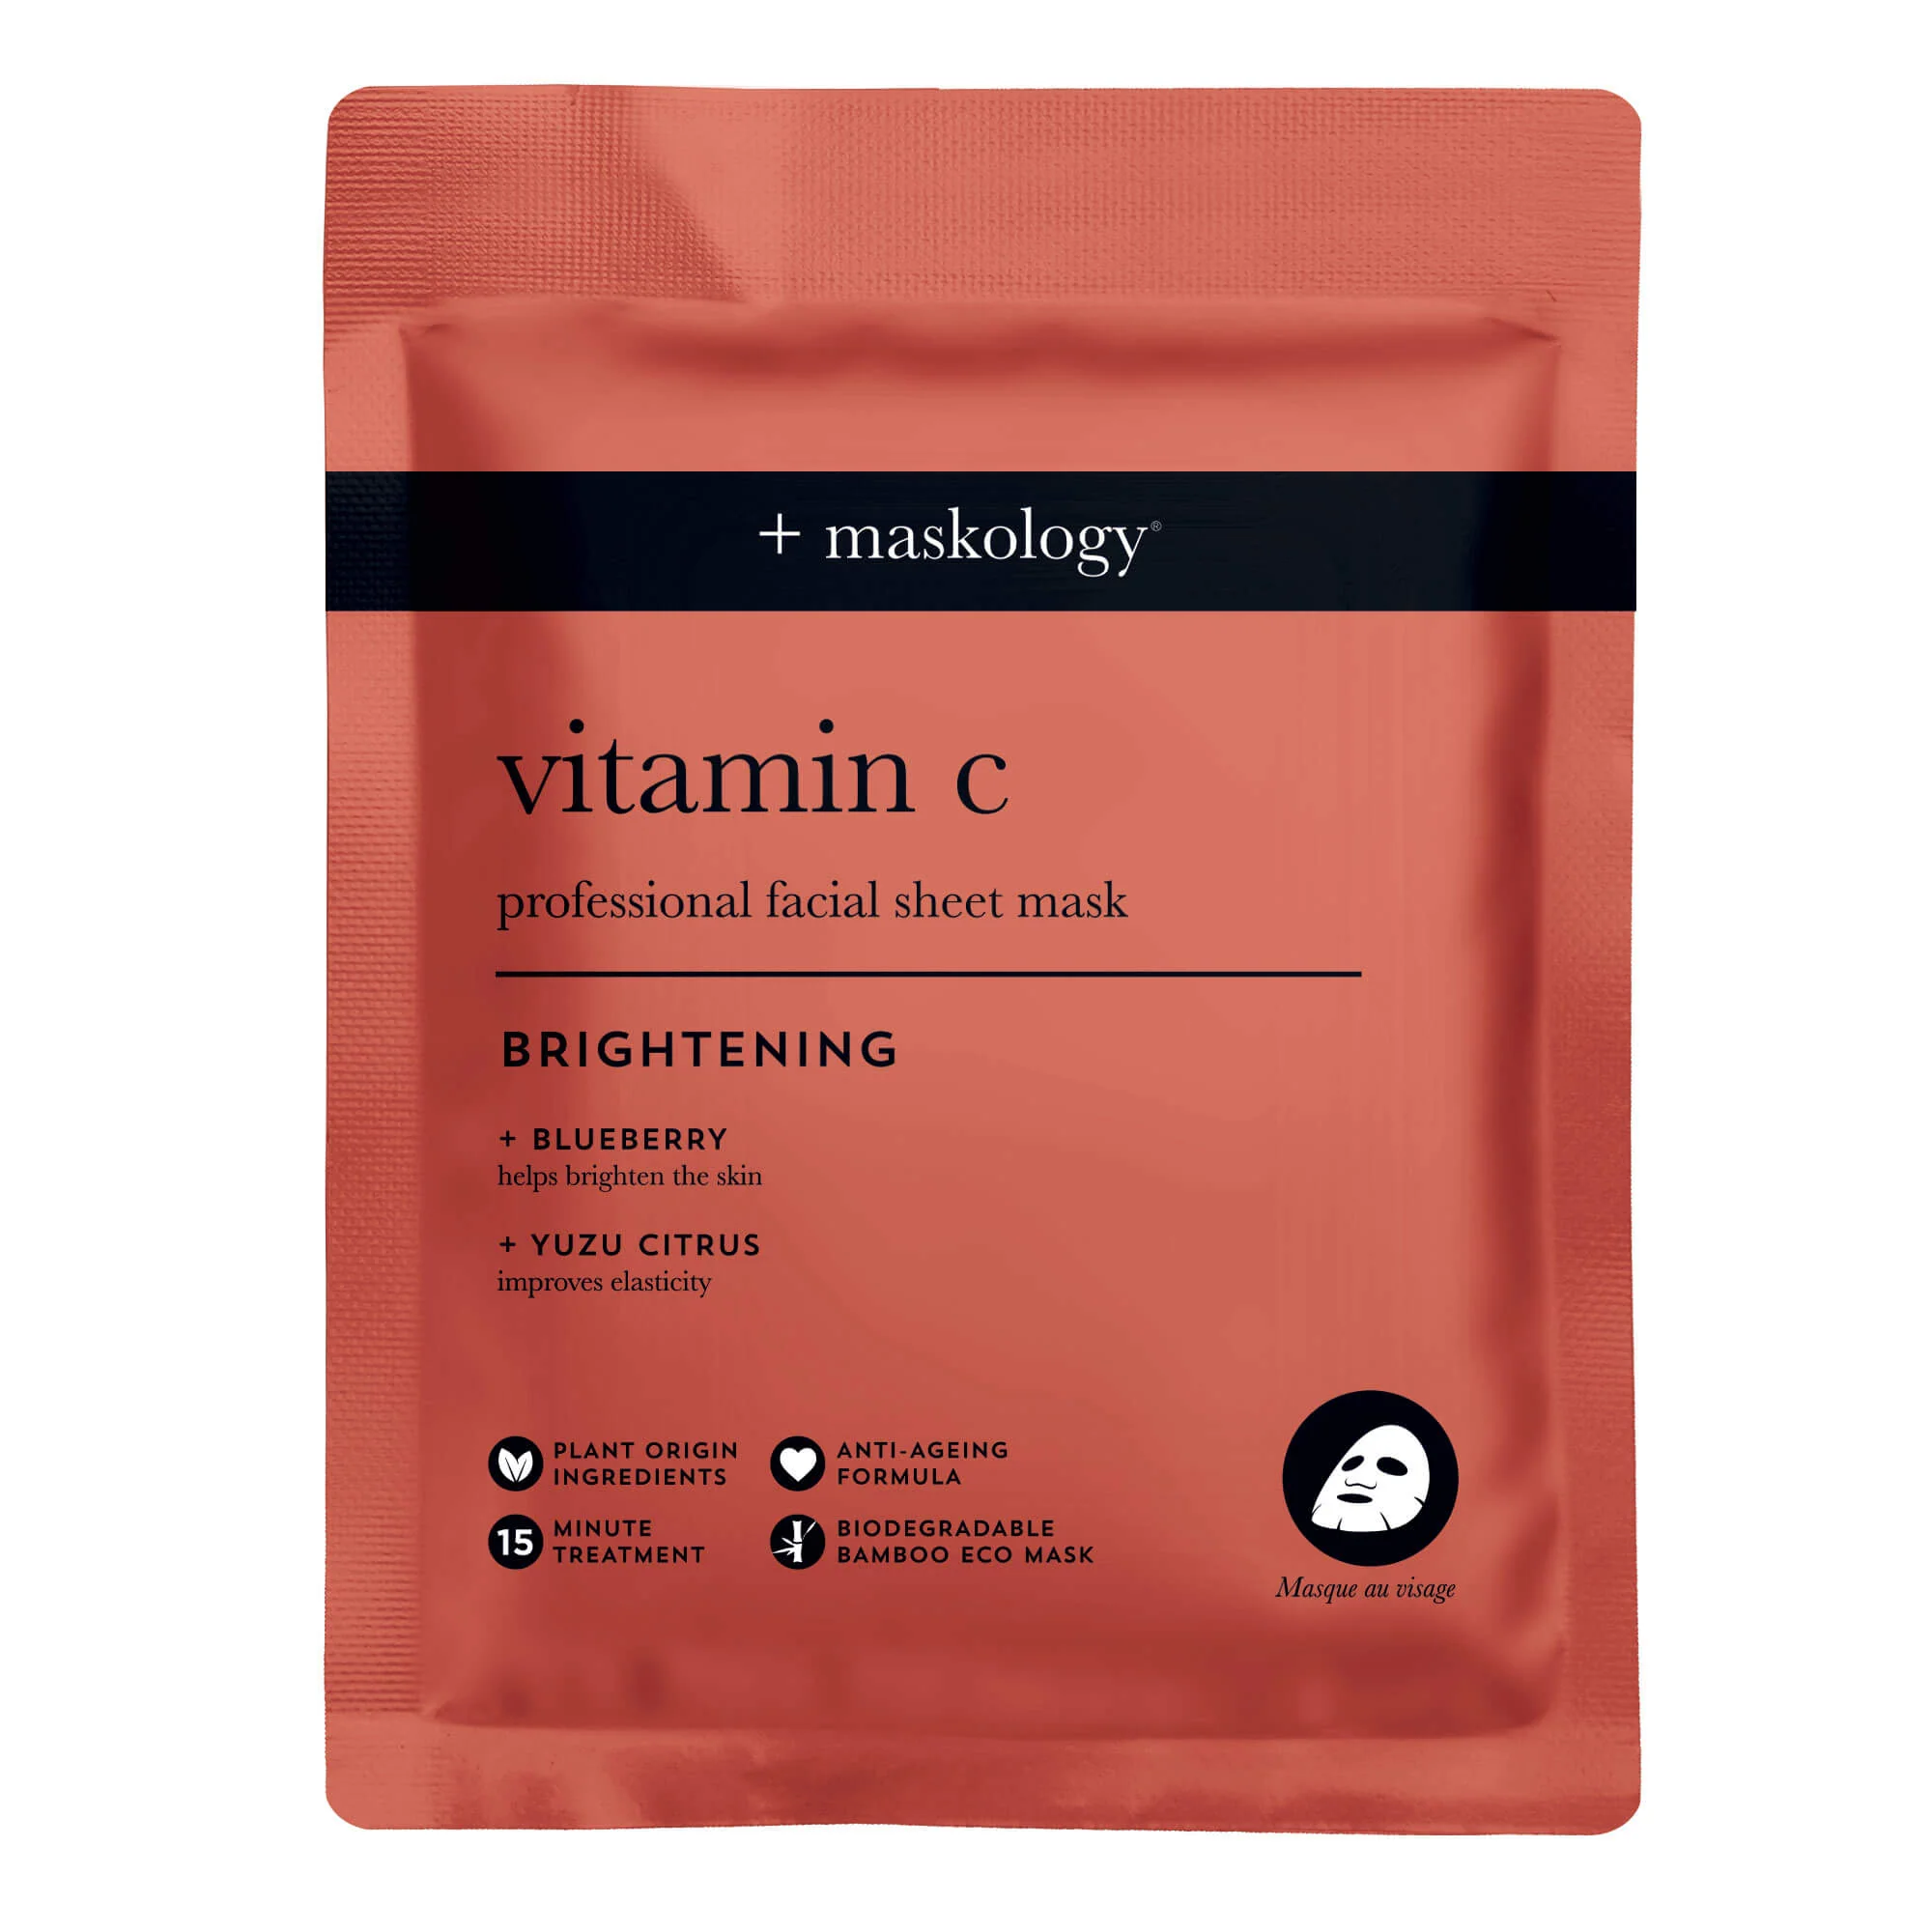 Maskology Vitamin C Professional Facial Sheet Mask